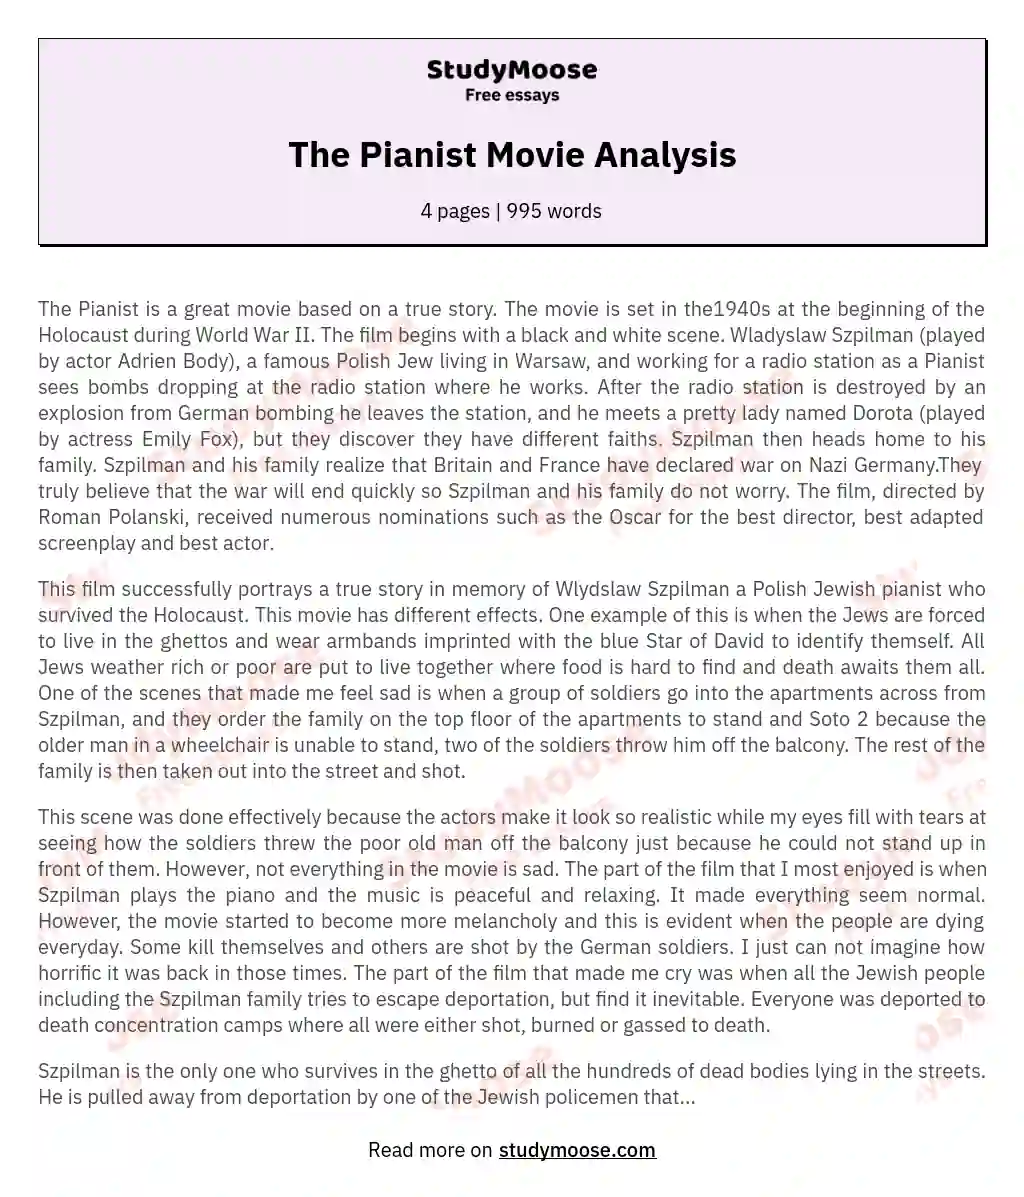 The Pianist Movie Analysis essay